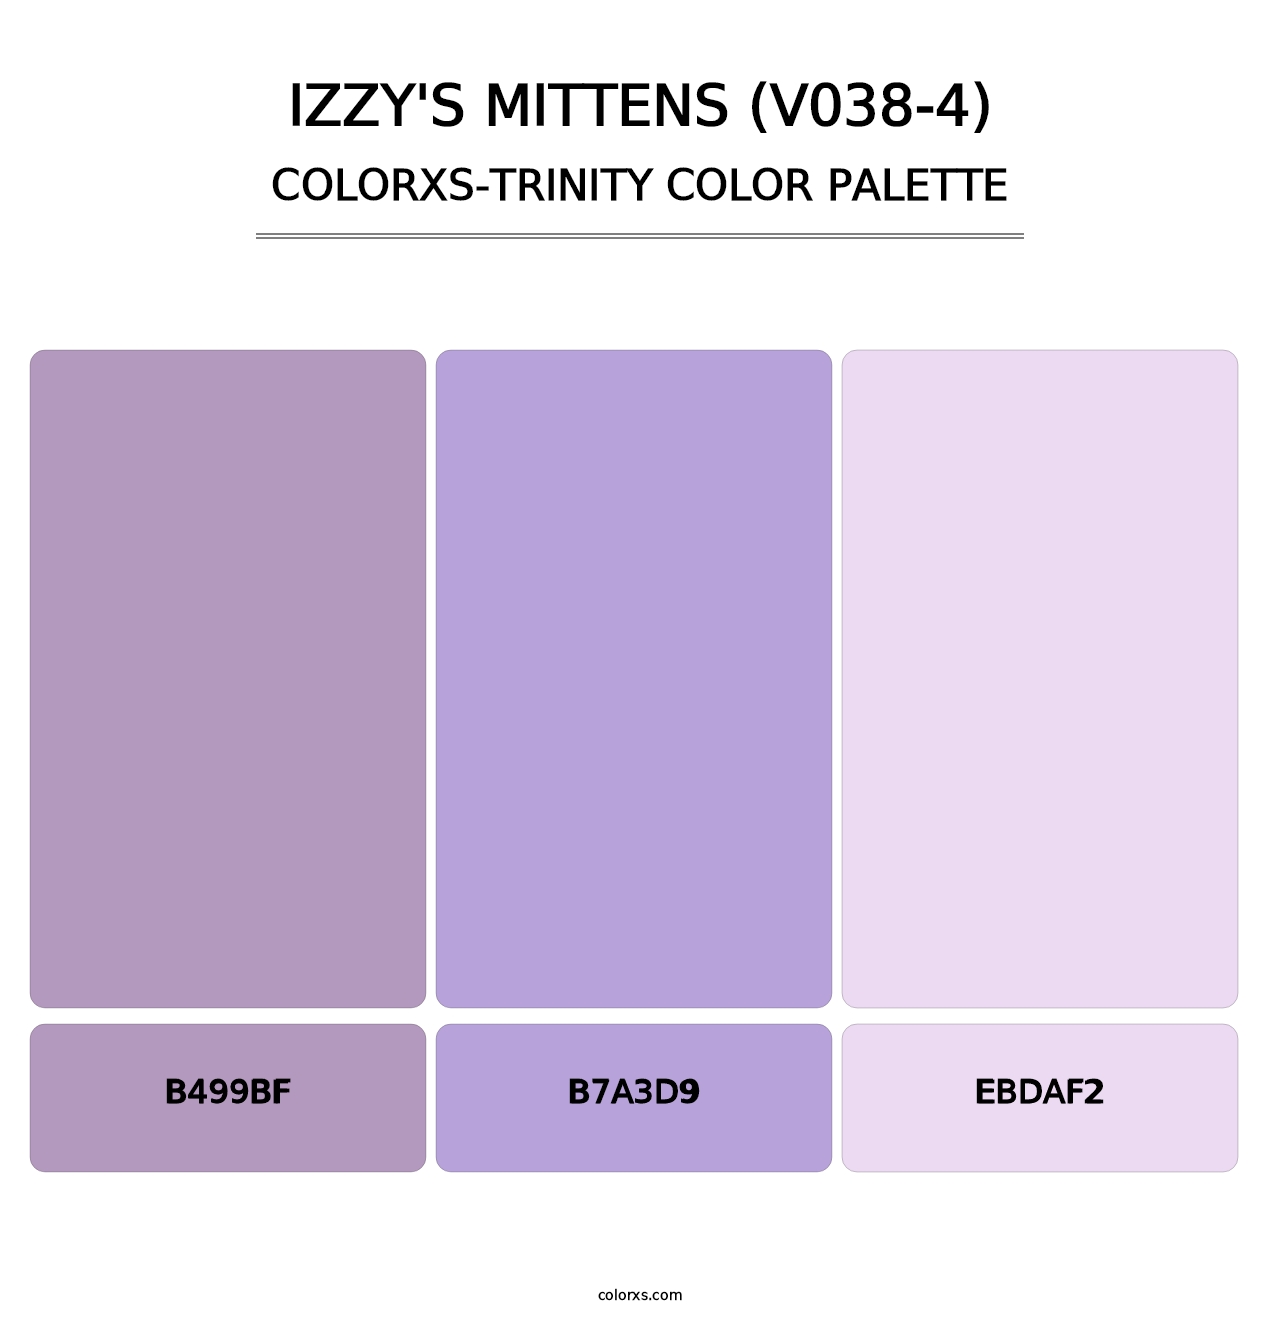 Izzy's Mittens (V038-4) - Colorxs Trinity Palette